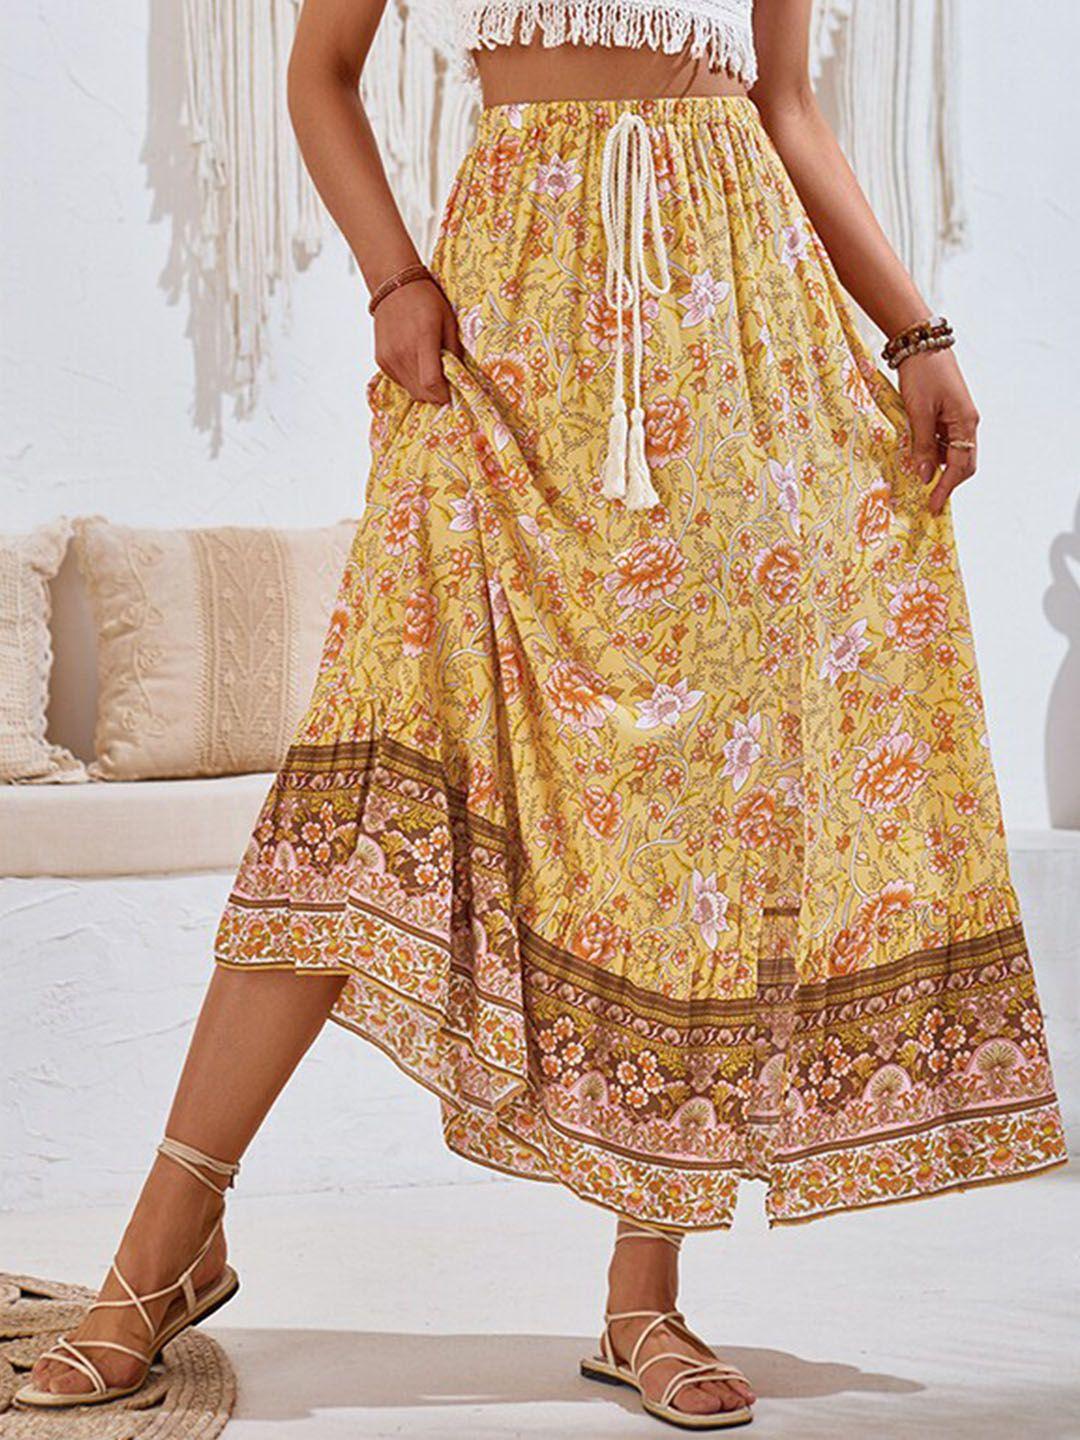 stylecast printed flared midi skirt